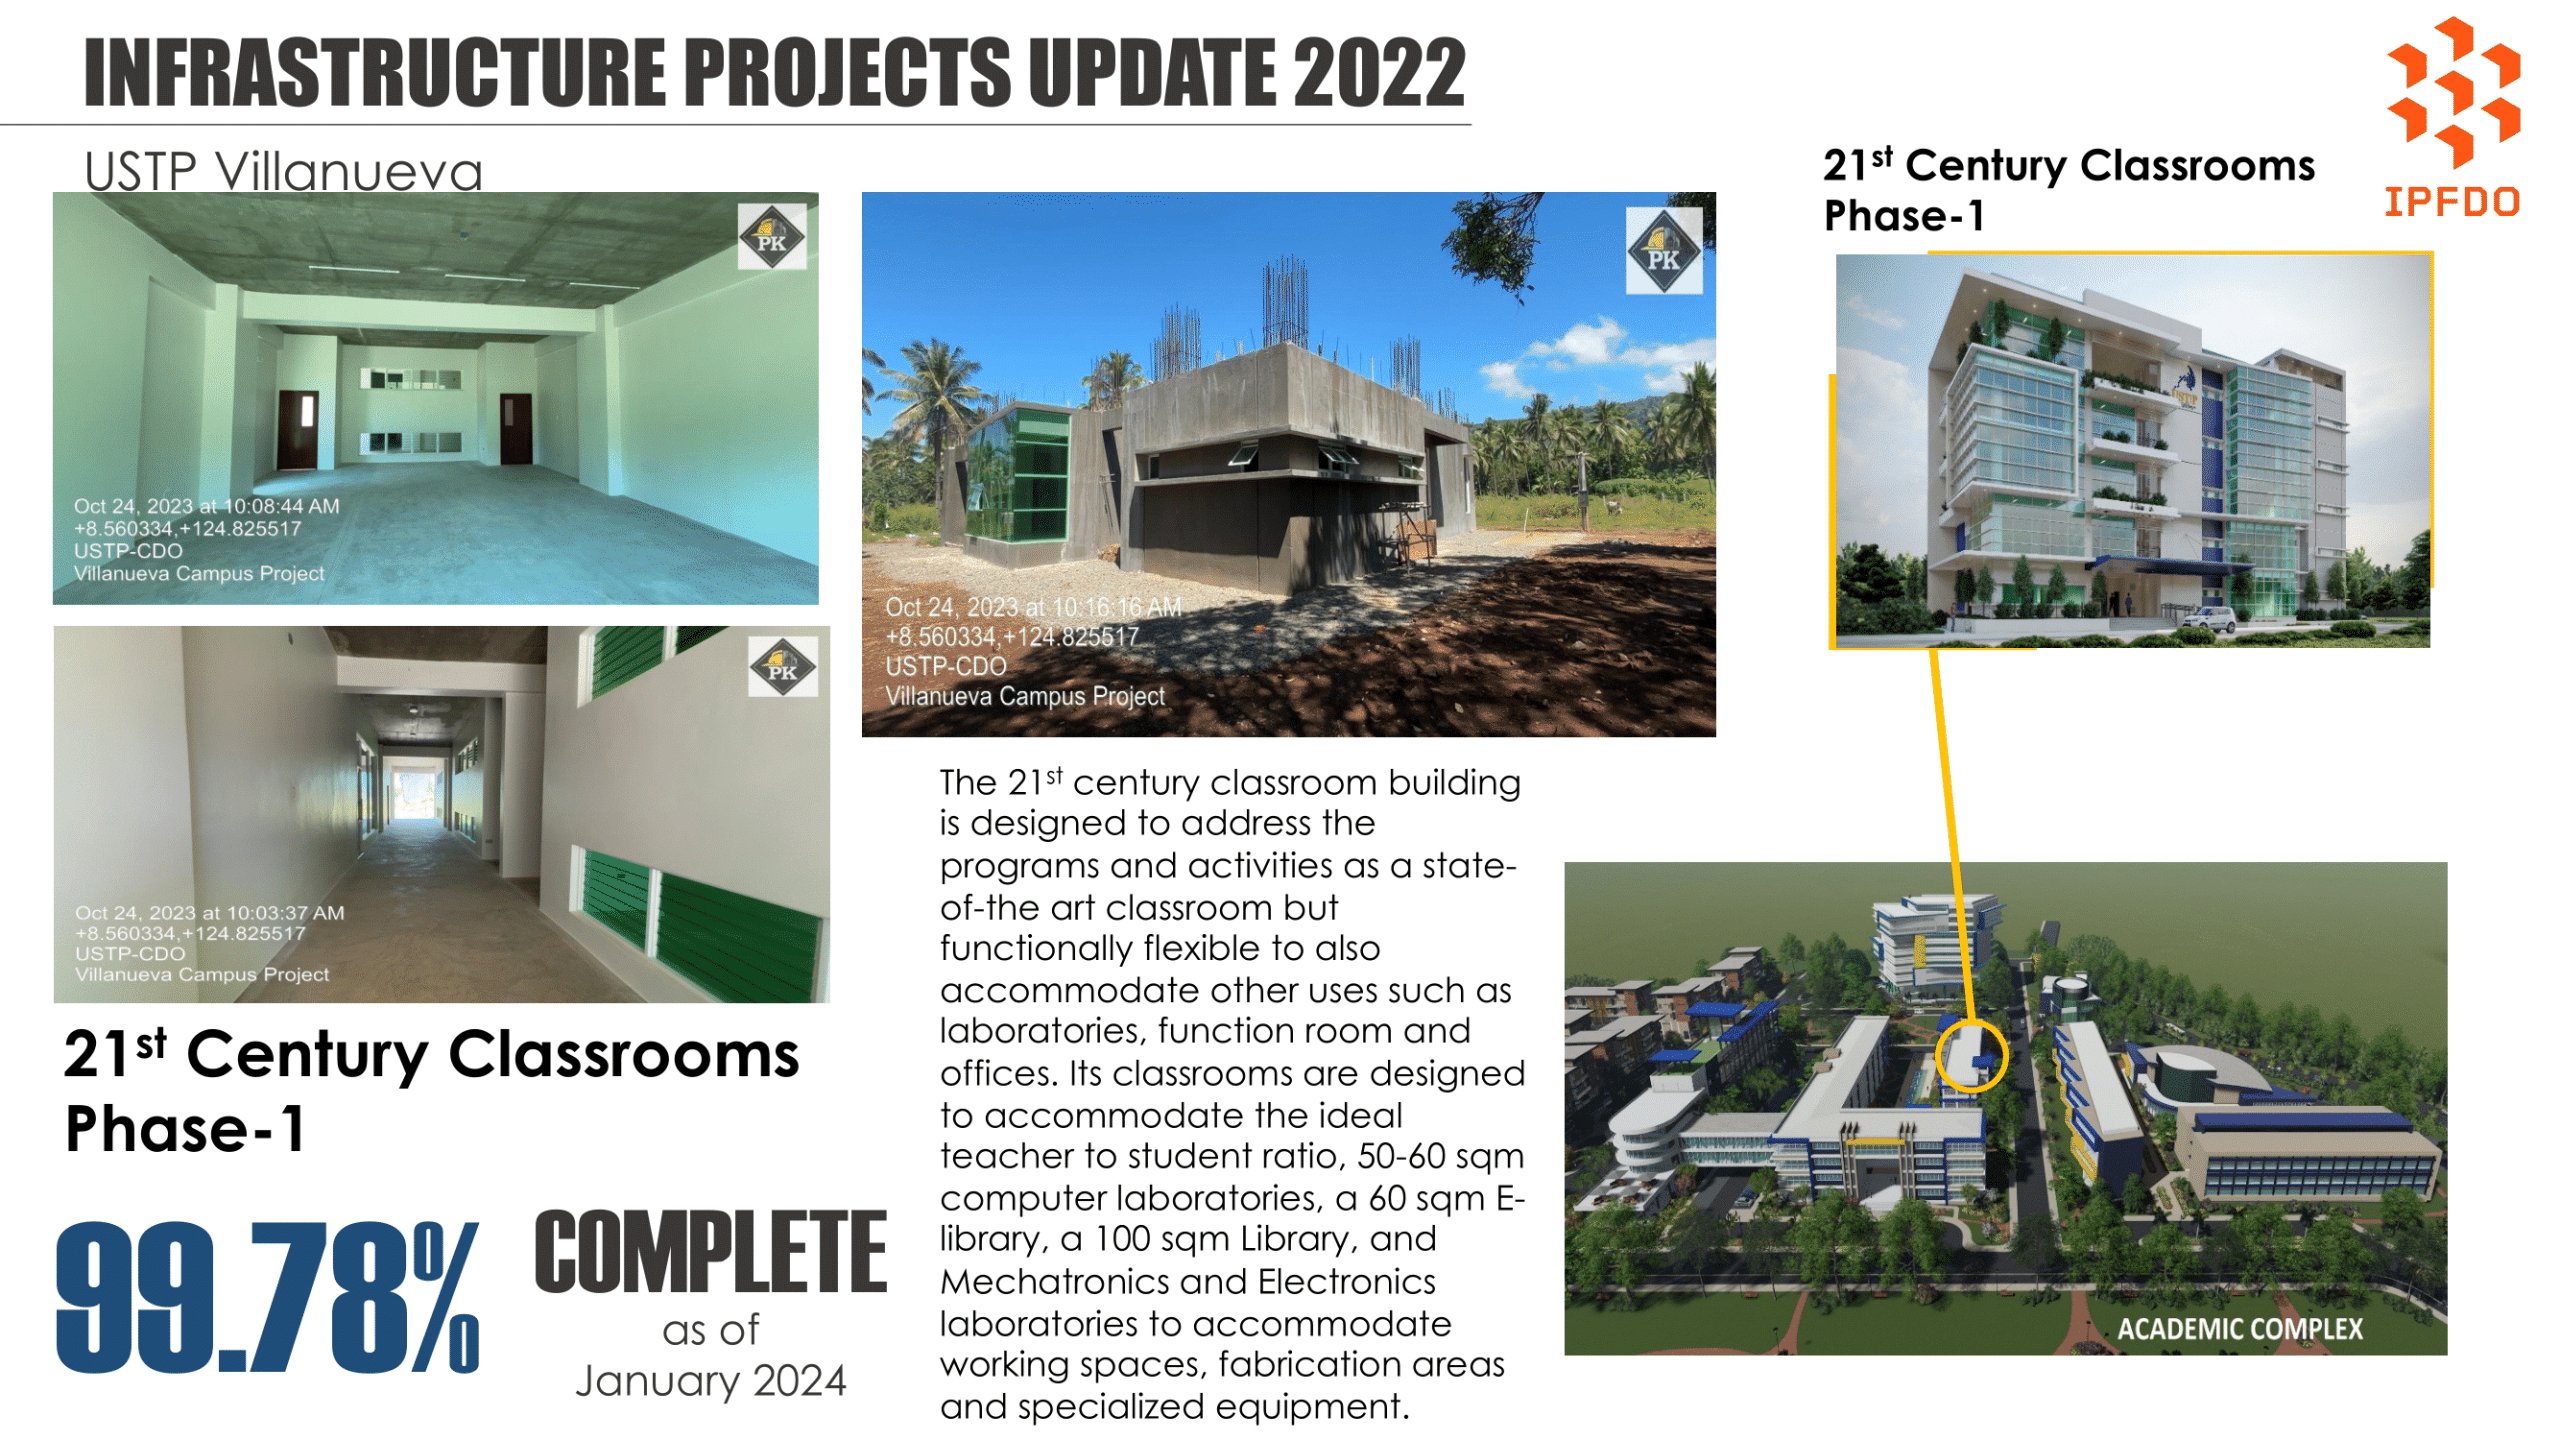 21st Century Classrooms (Phase 1) - USTP Villanueva